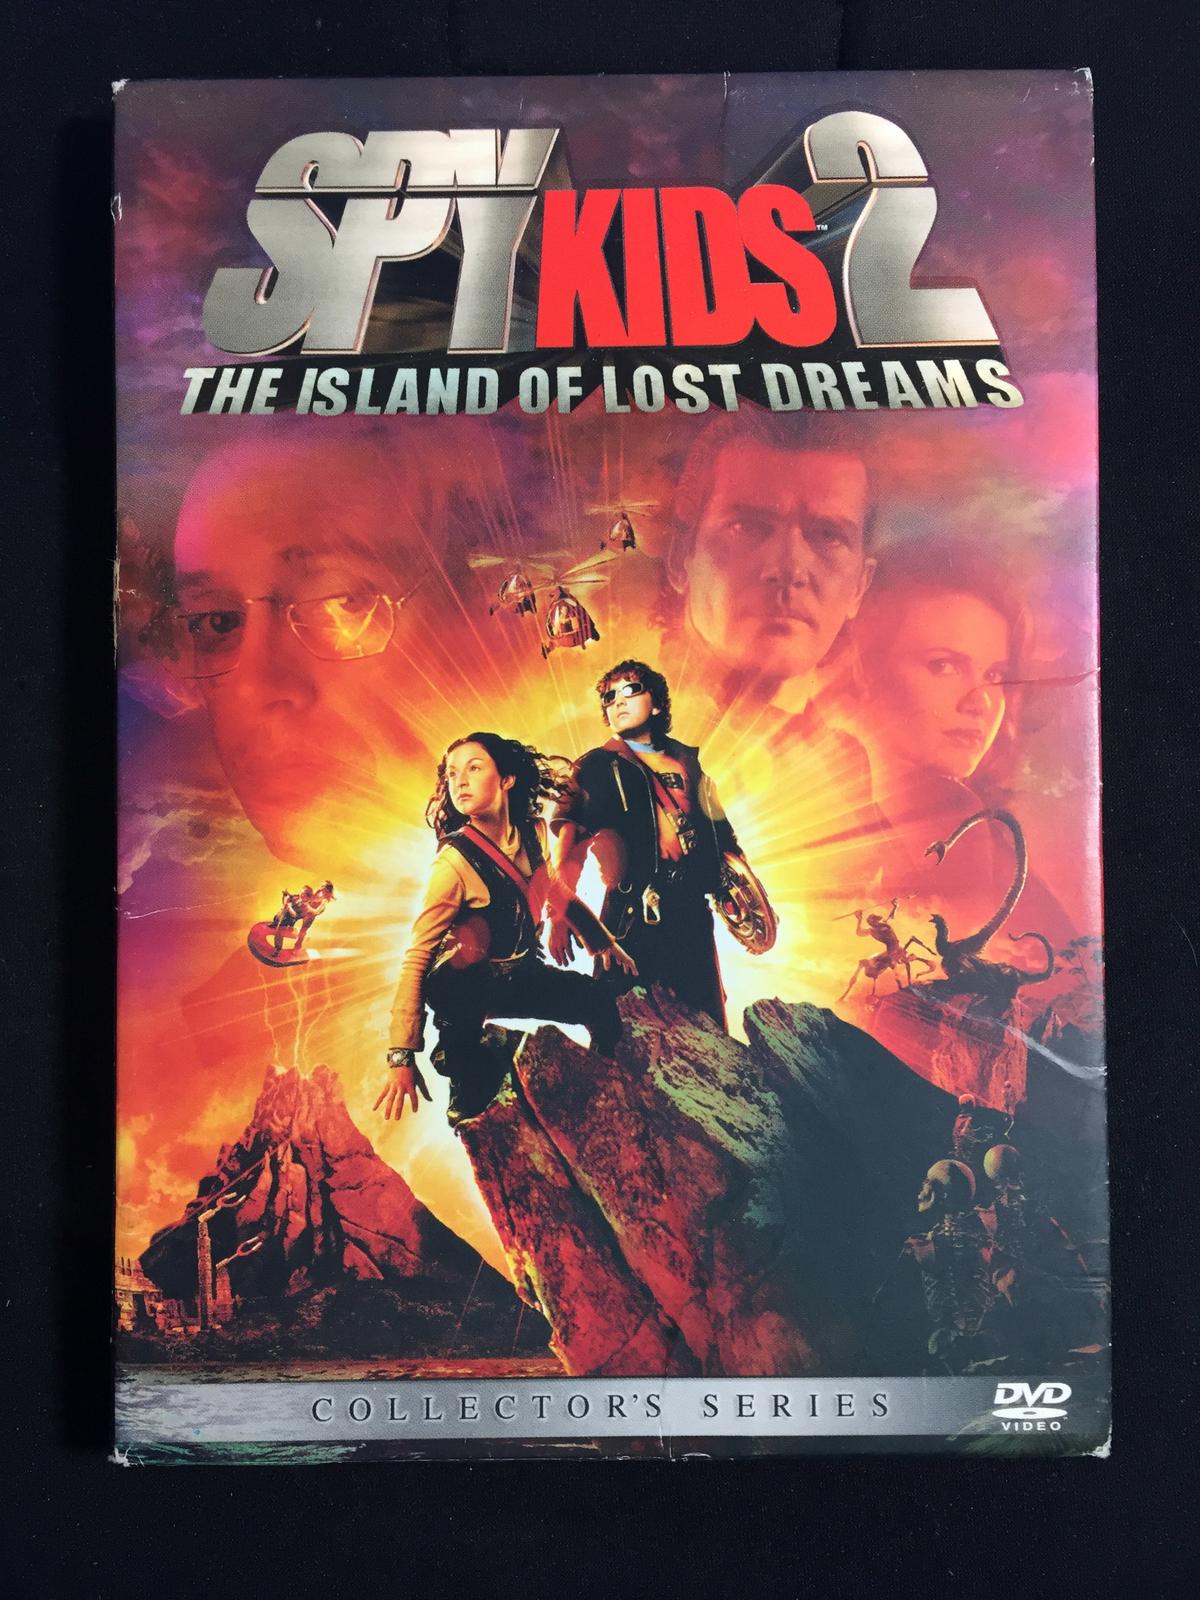 Spy Kids 2 The Island of Lost Dreams DVD